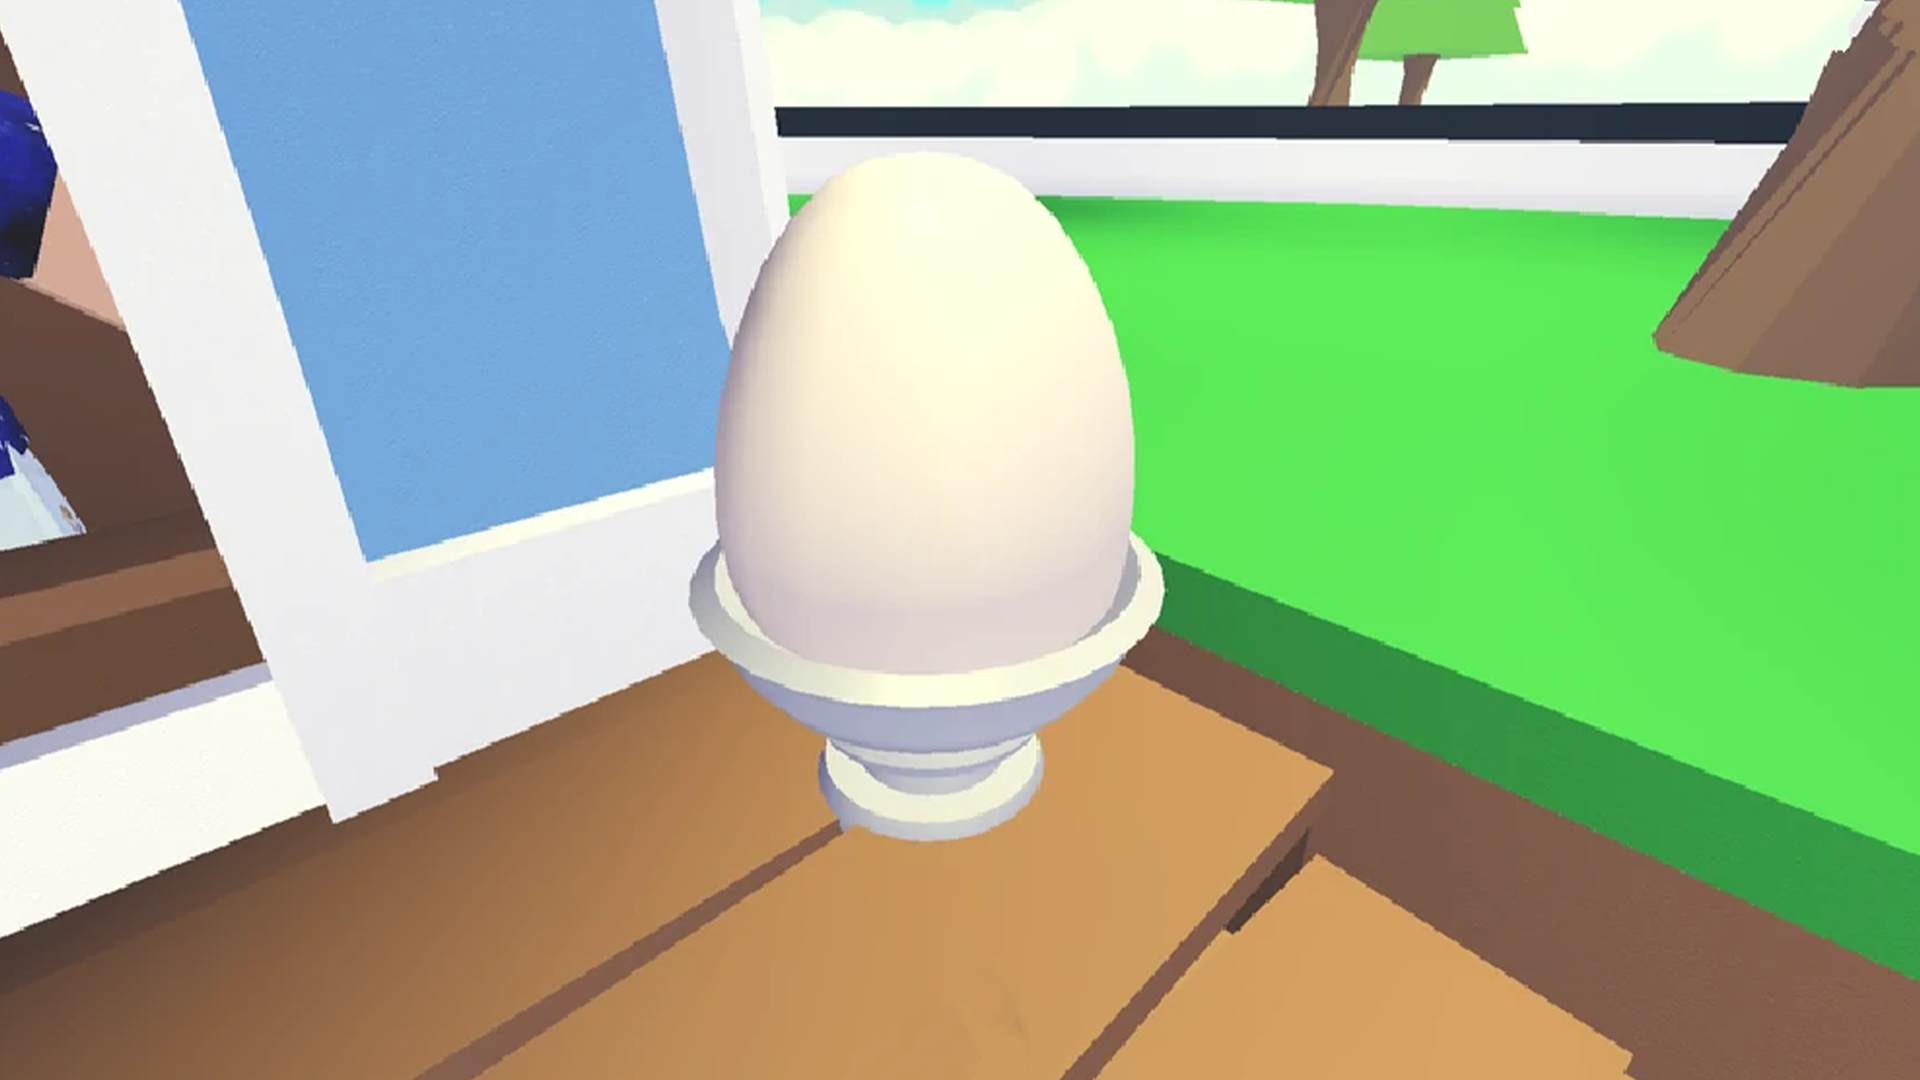 Голова яйцо роблокс. Яйца из РОБЛОКСА адопт ми. Яйцо РОБЛОКС. Яйцо из роблакса Адобми. В РОБЛОКСЕ яйца в adopt me.